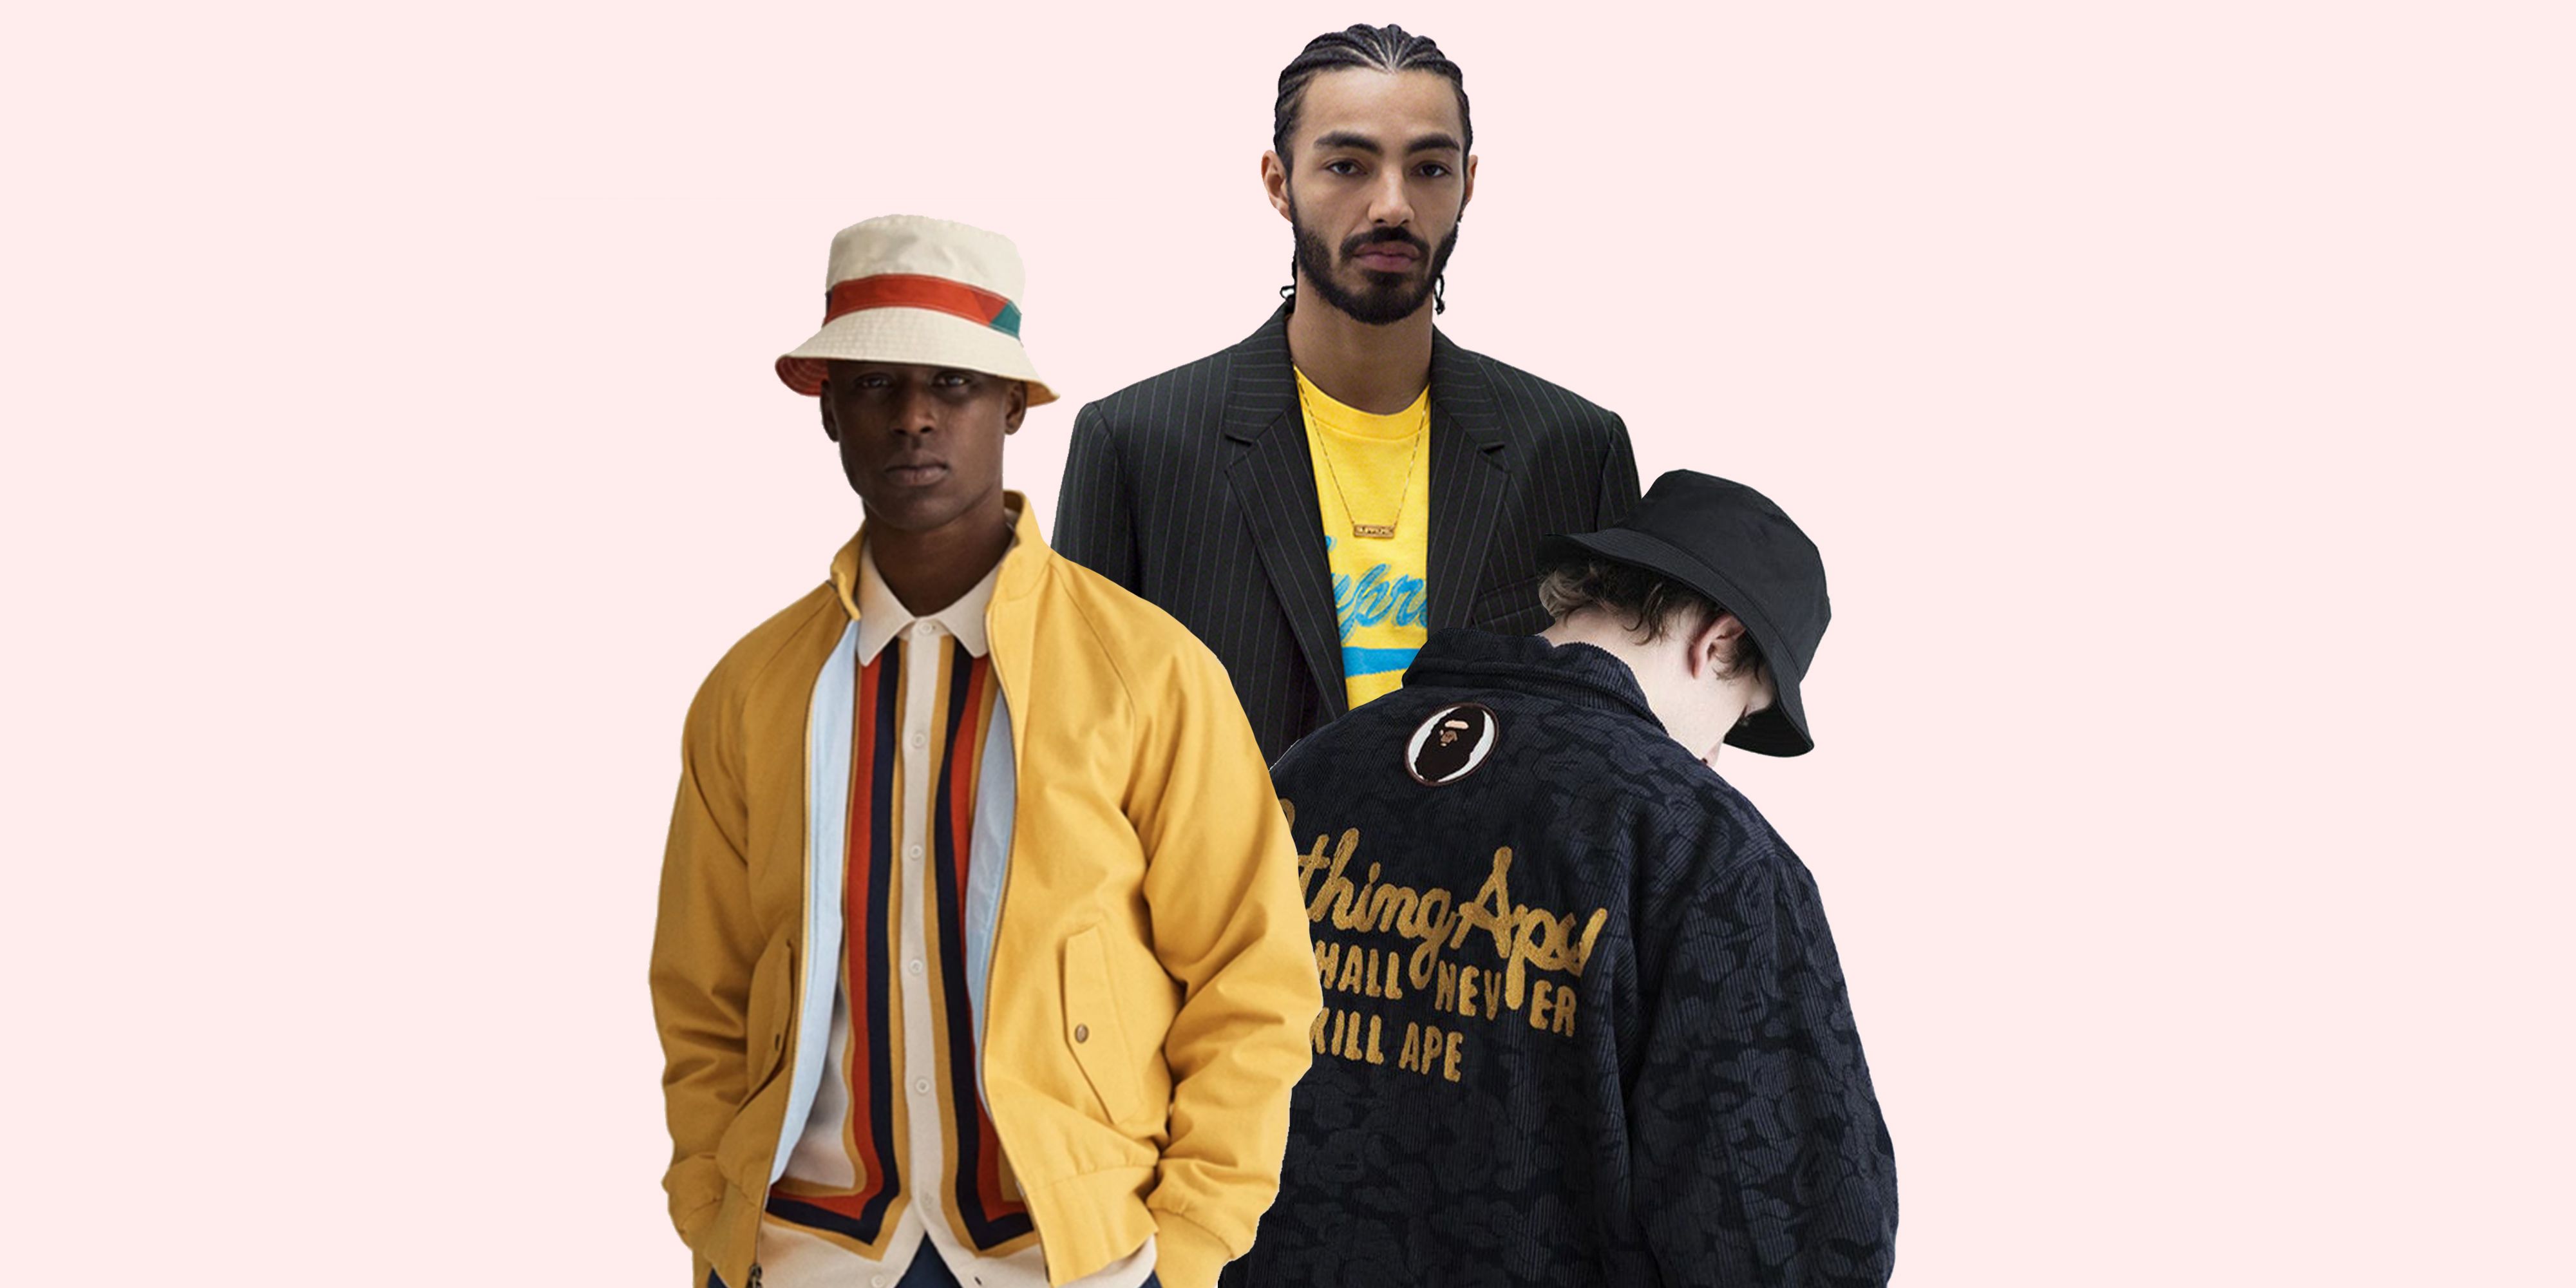 Men's High Fashion Clothing, Streetwear Brand